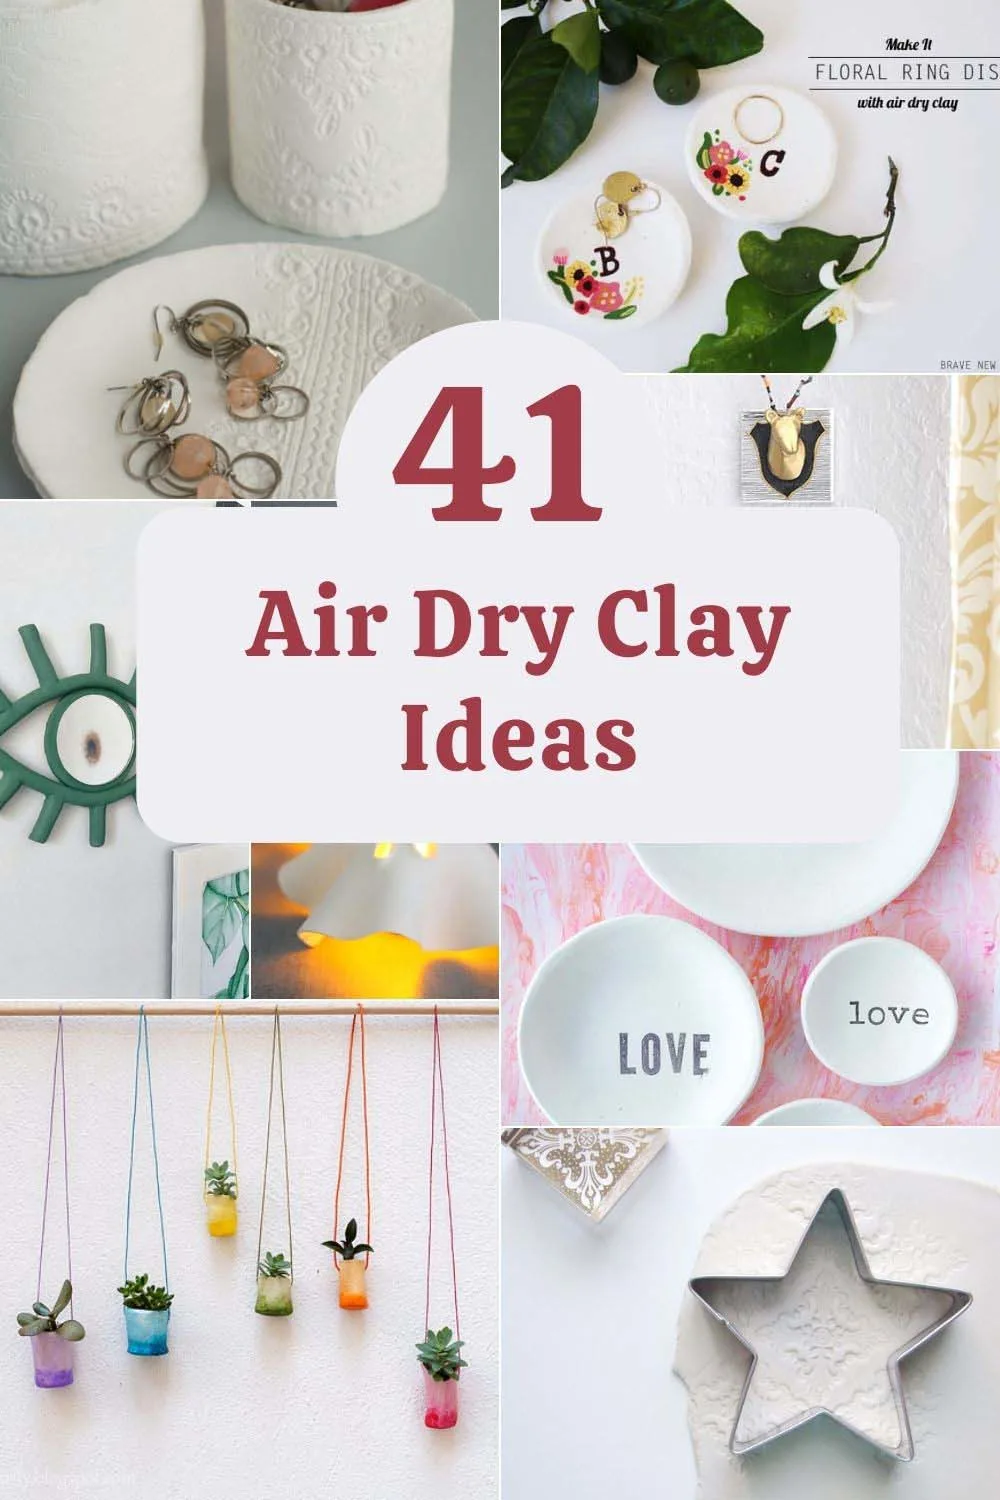 DAS Air Dry Modelling Clay Australia